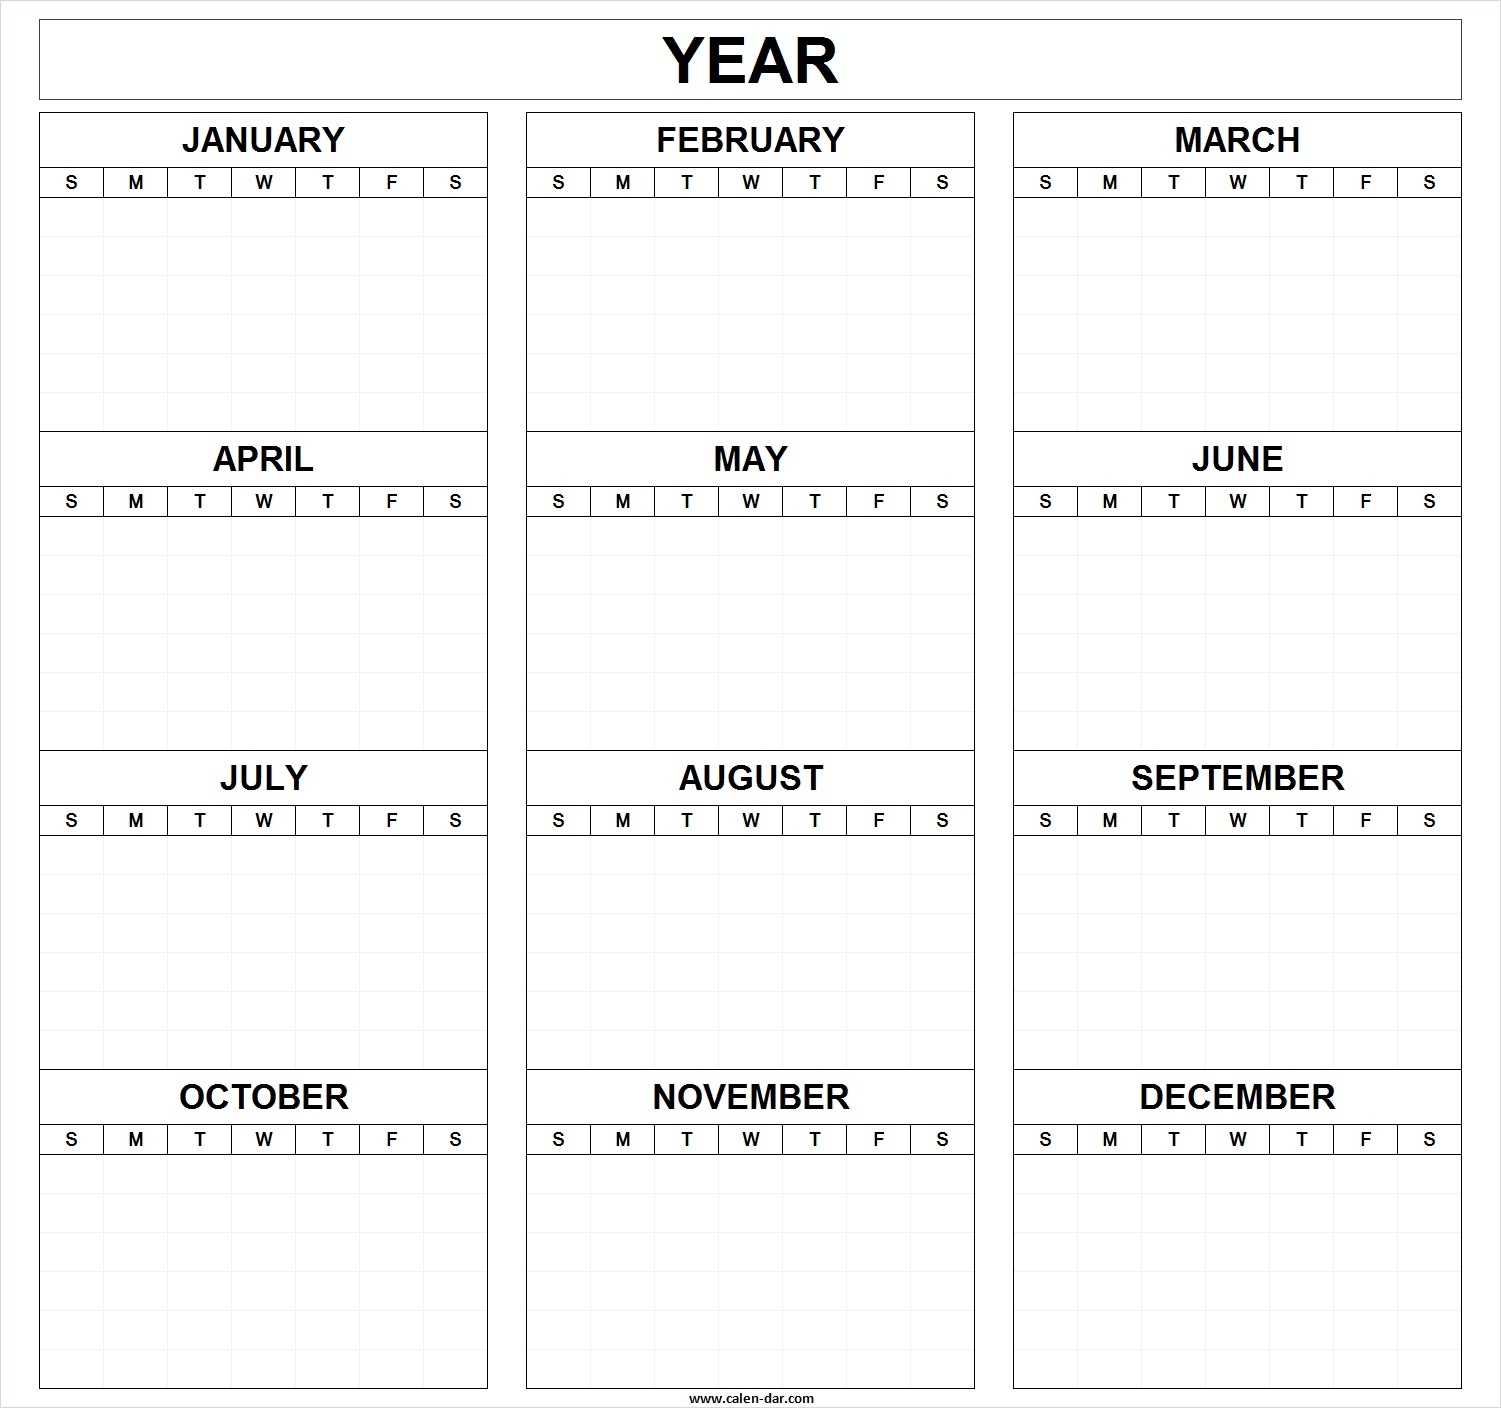 Printable Blank Year Calendar Template By Month | Editable Year Calendar One Page Template